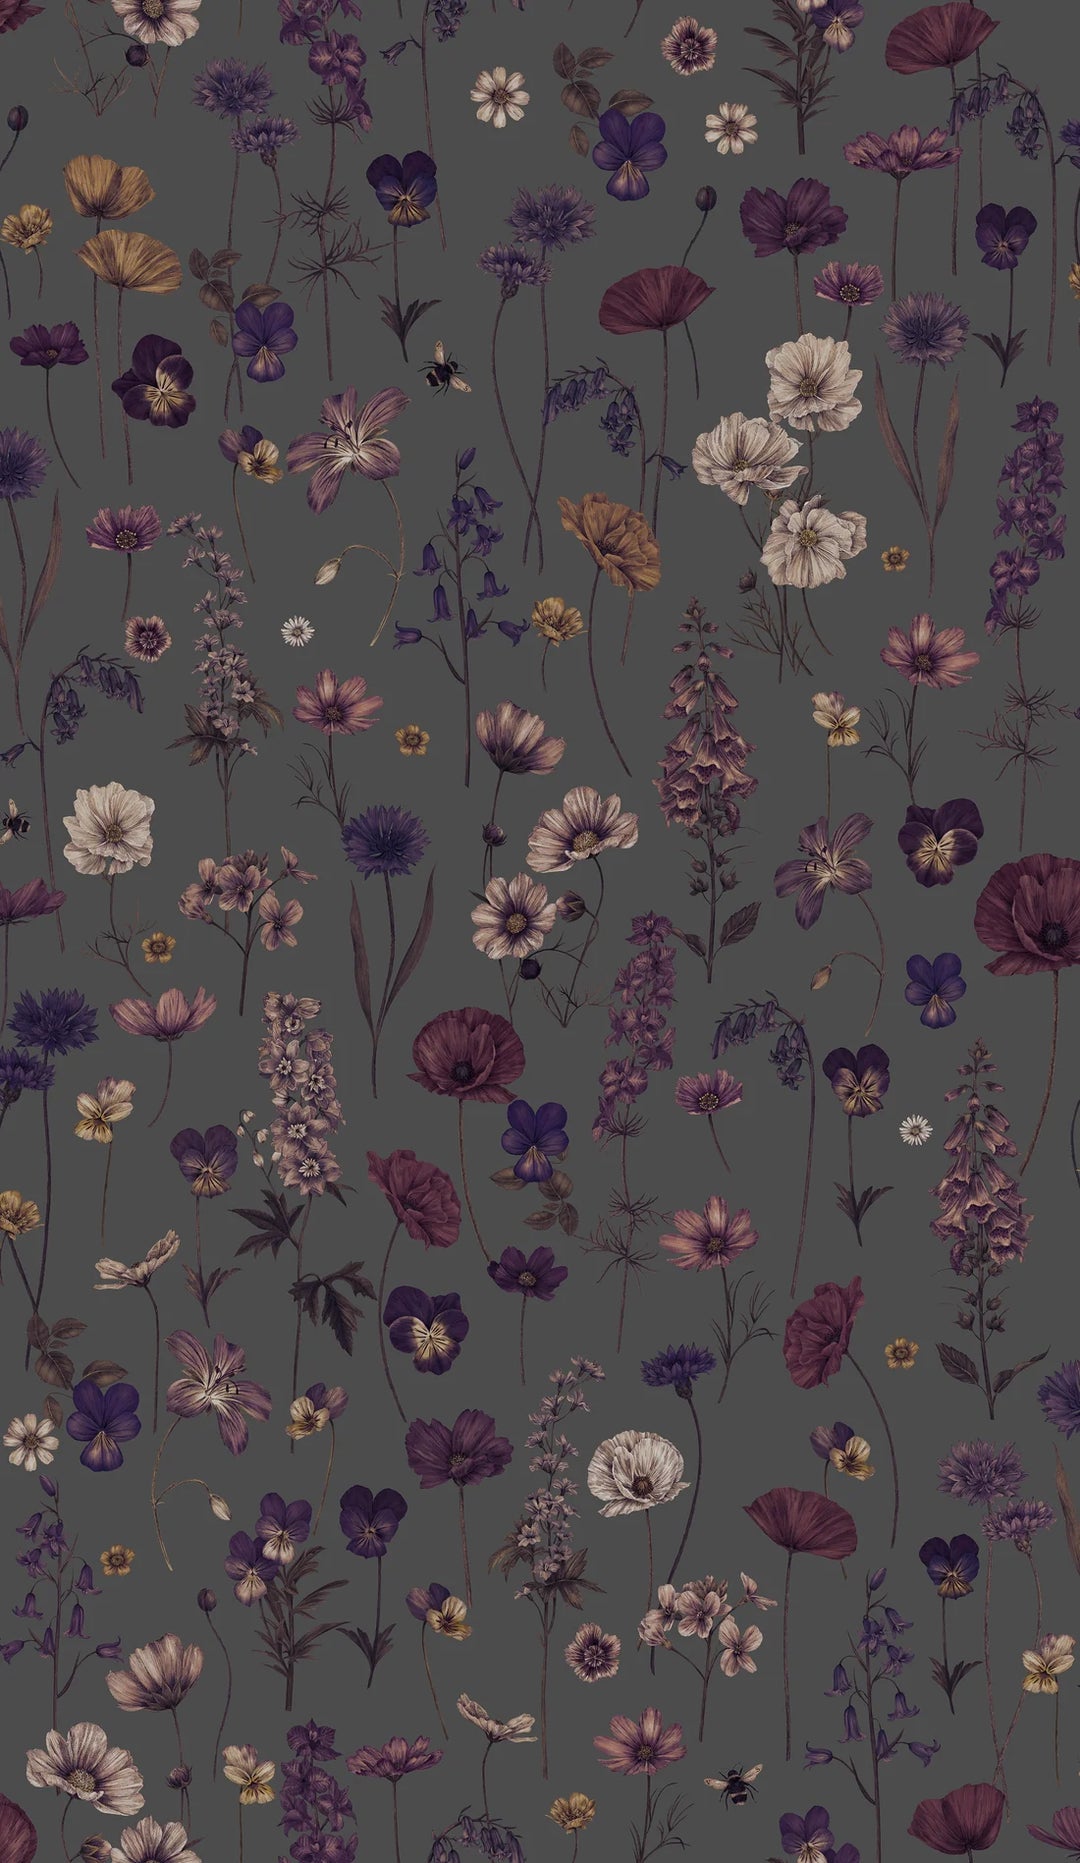 Victoria-Sanders-Botanica-Wallpaper-Verdigris-Trailing-Blooms-across-green-rich-background-floral-wallpaper-artisan-designed